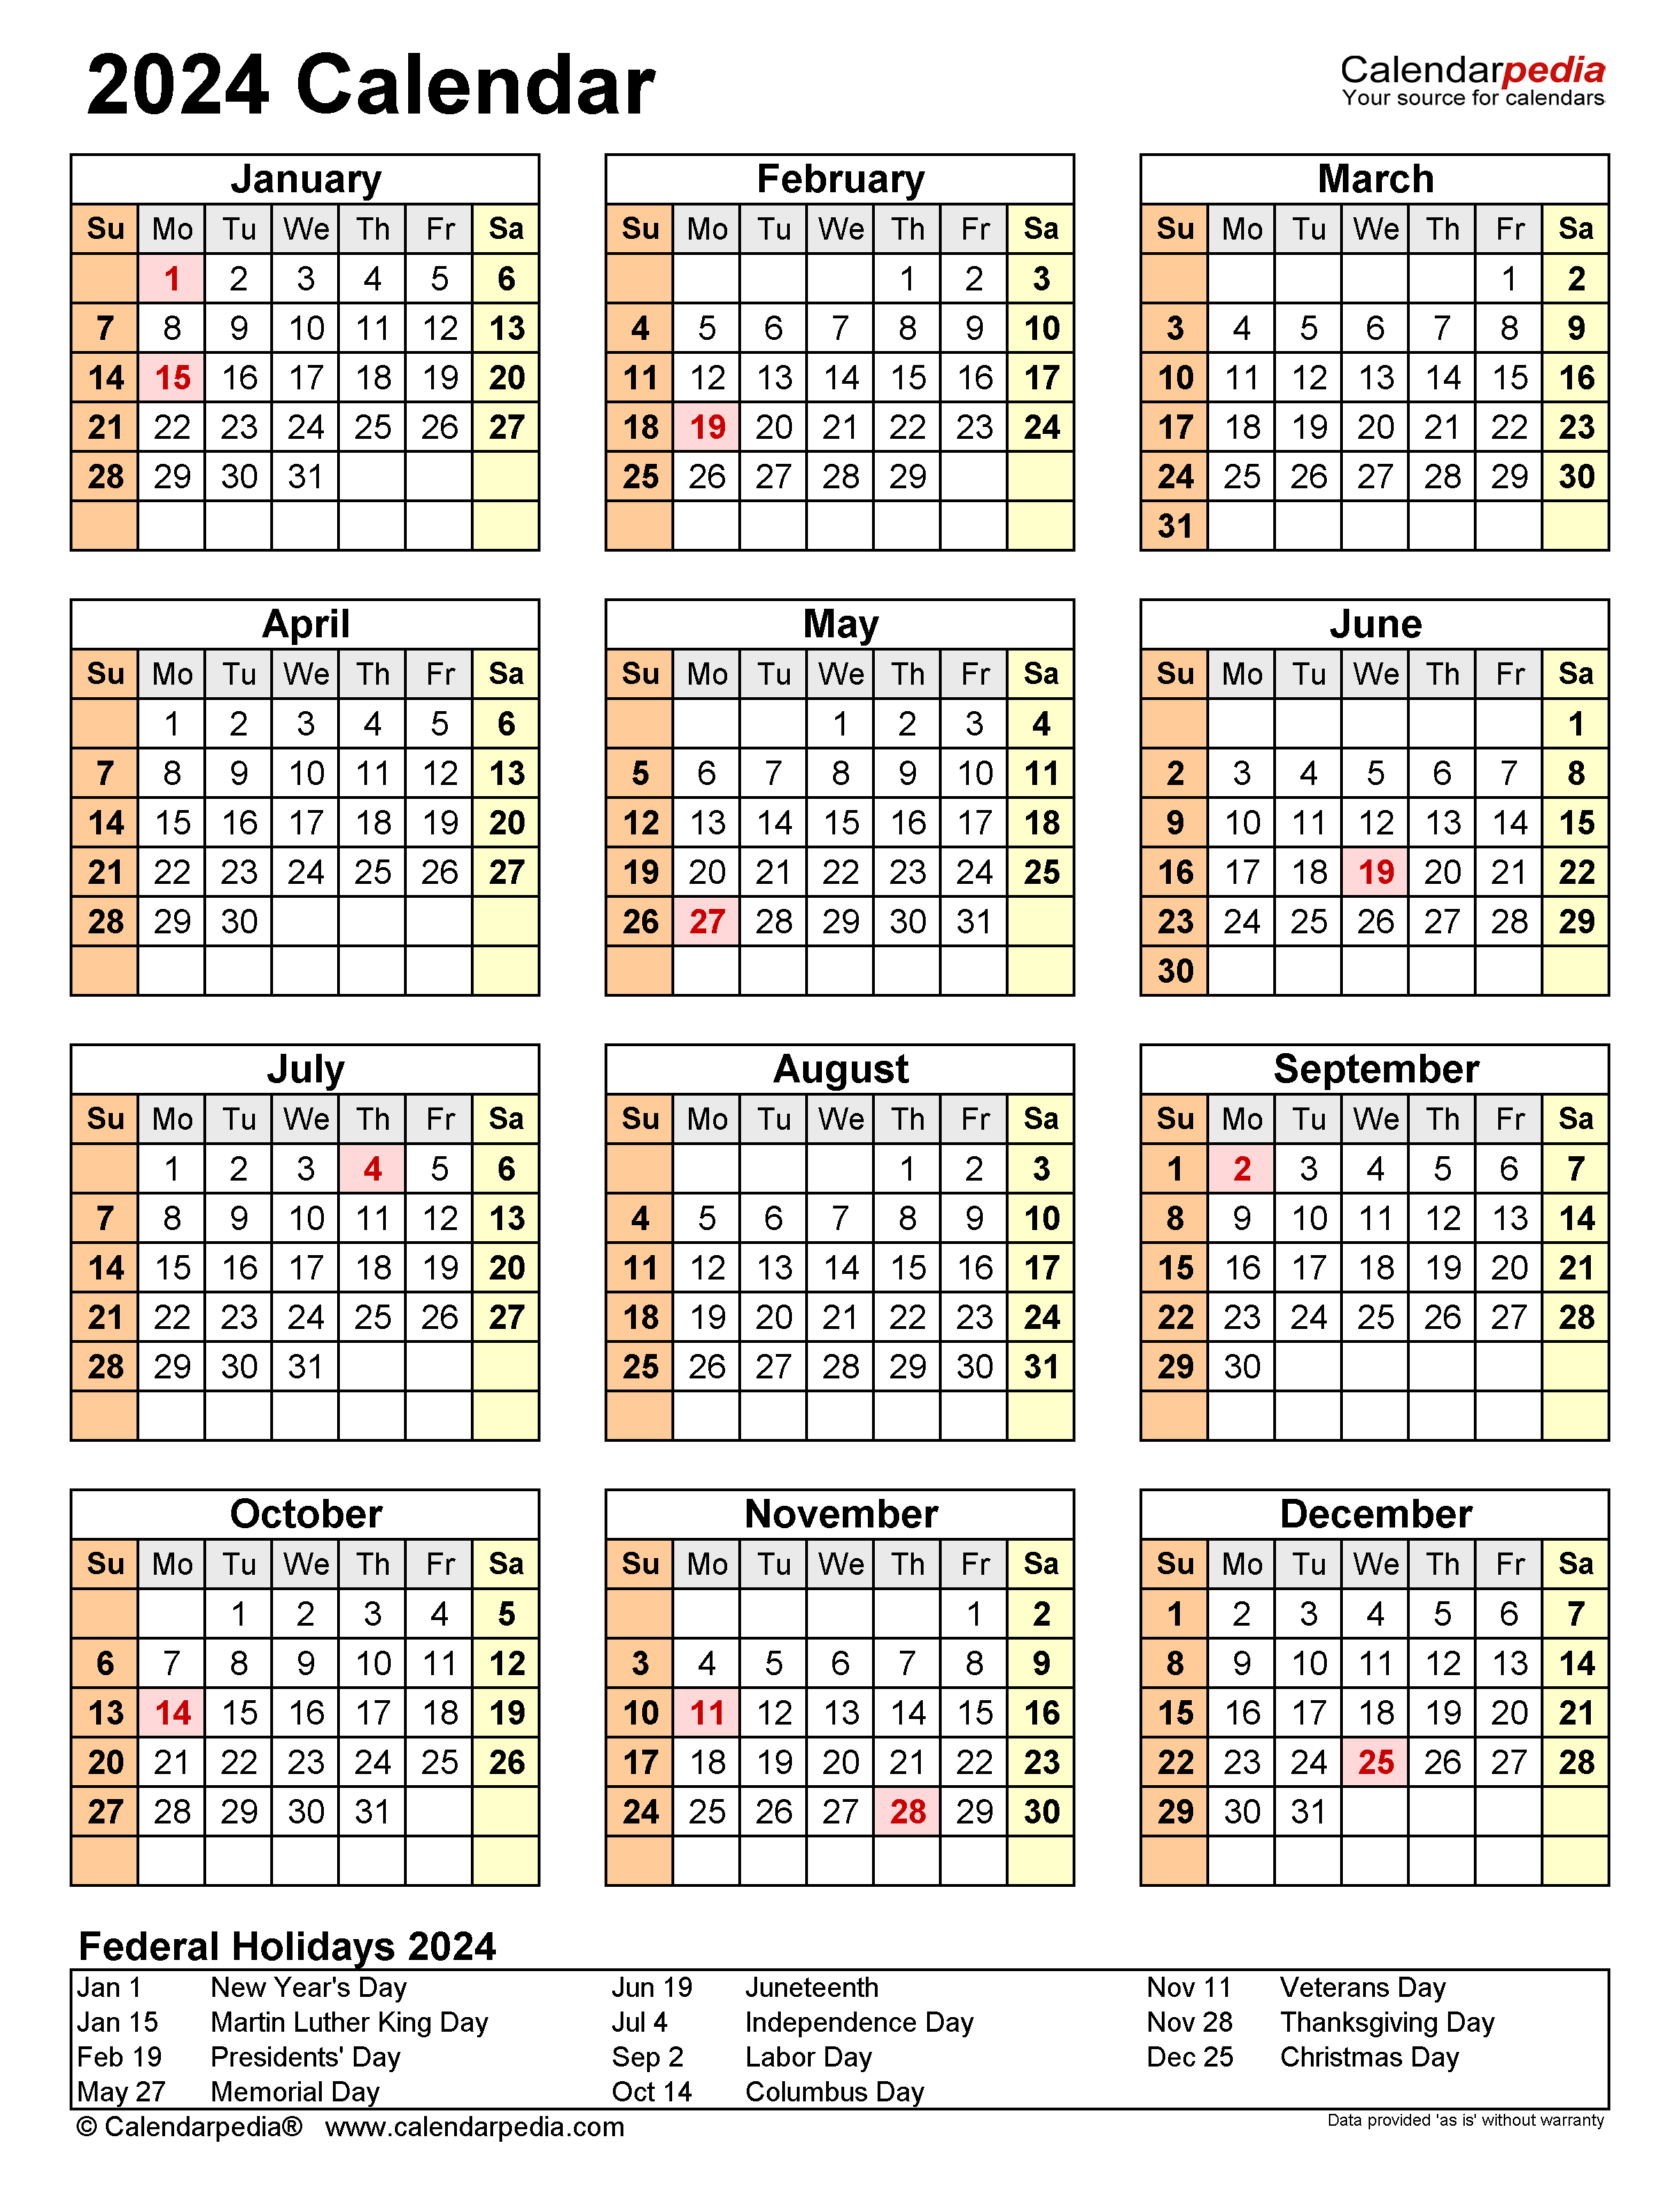 Free Printable 2024 Calendar With Holidays Crownflourmills - Free Printable 2024 Calendar With Holidays Philippines